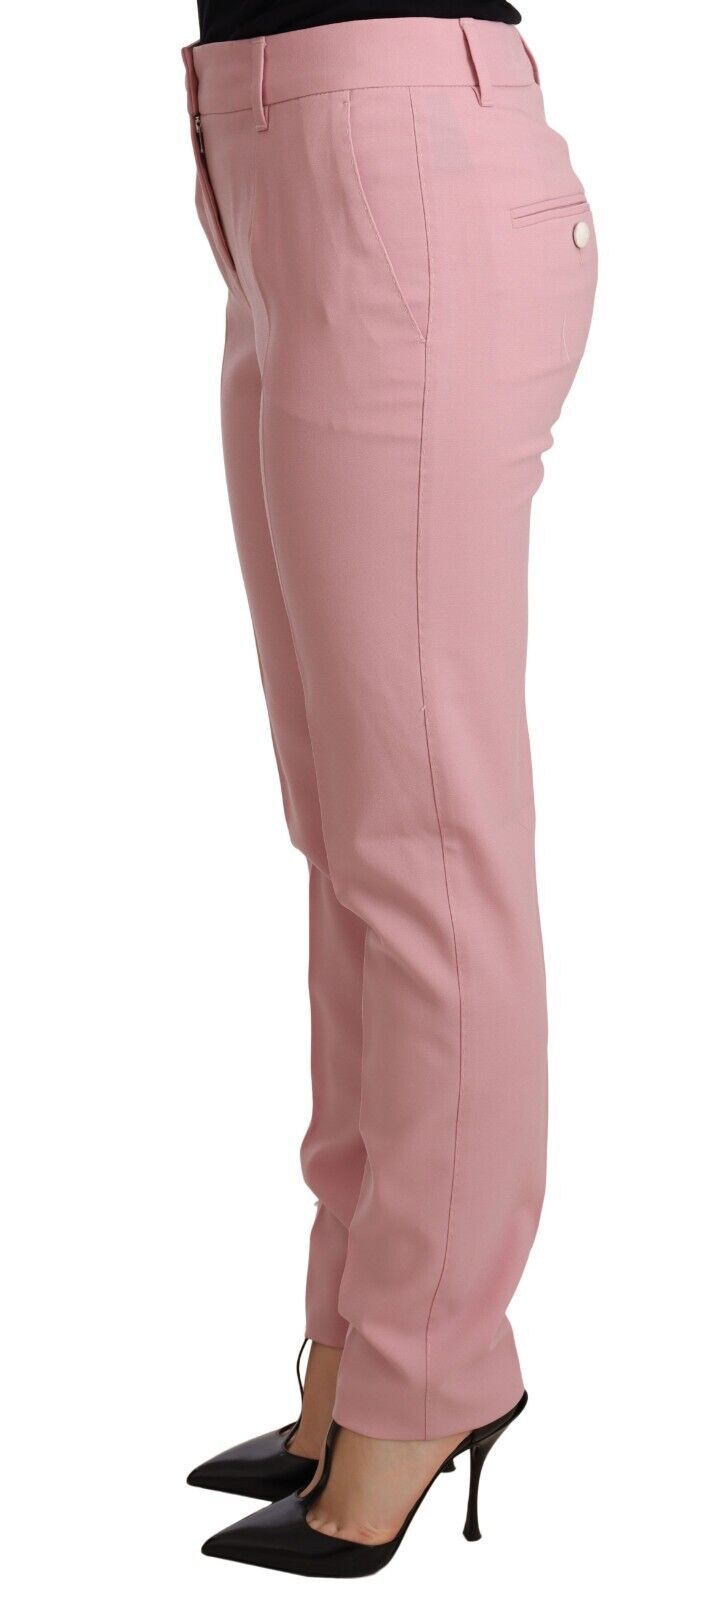 Pink Women Trouser Virgin Wool Stretch Pants